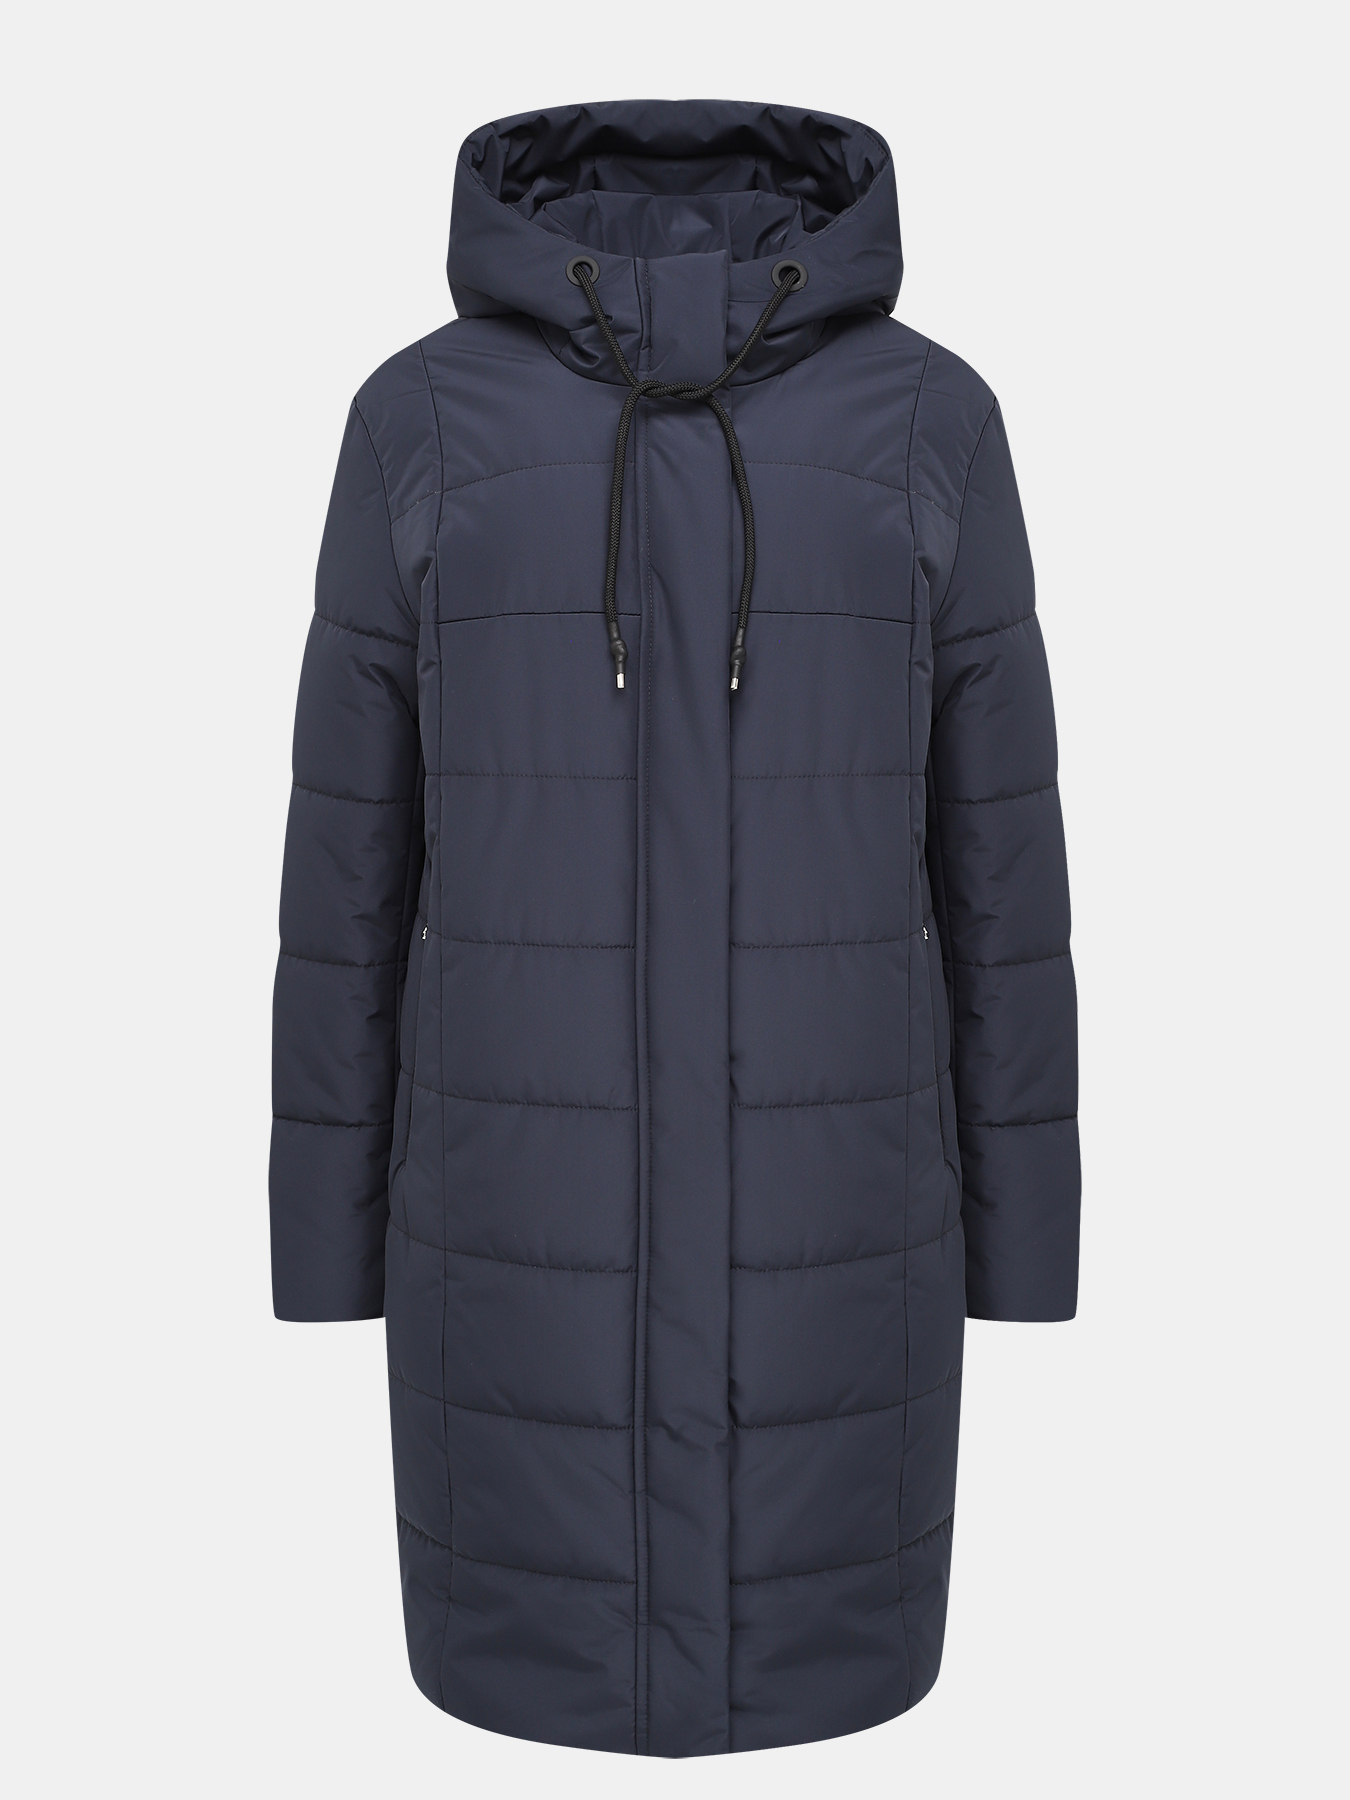 Пальто зимнее Maritta 433548-022, цвет темно-синий, размер 48